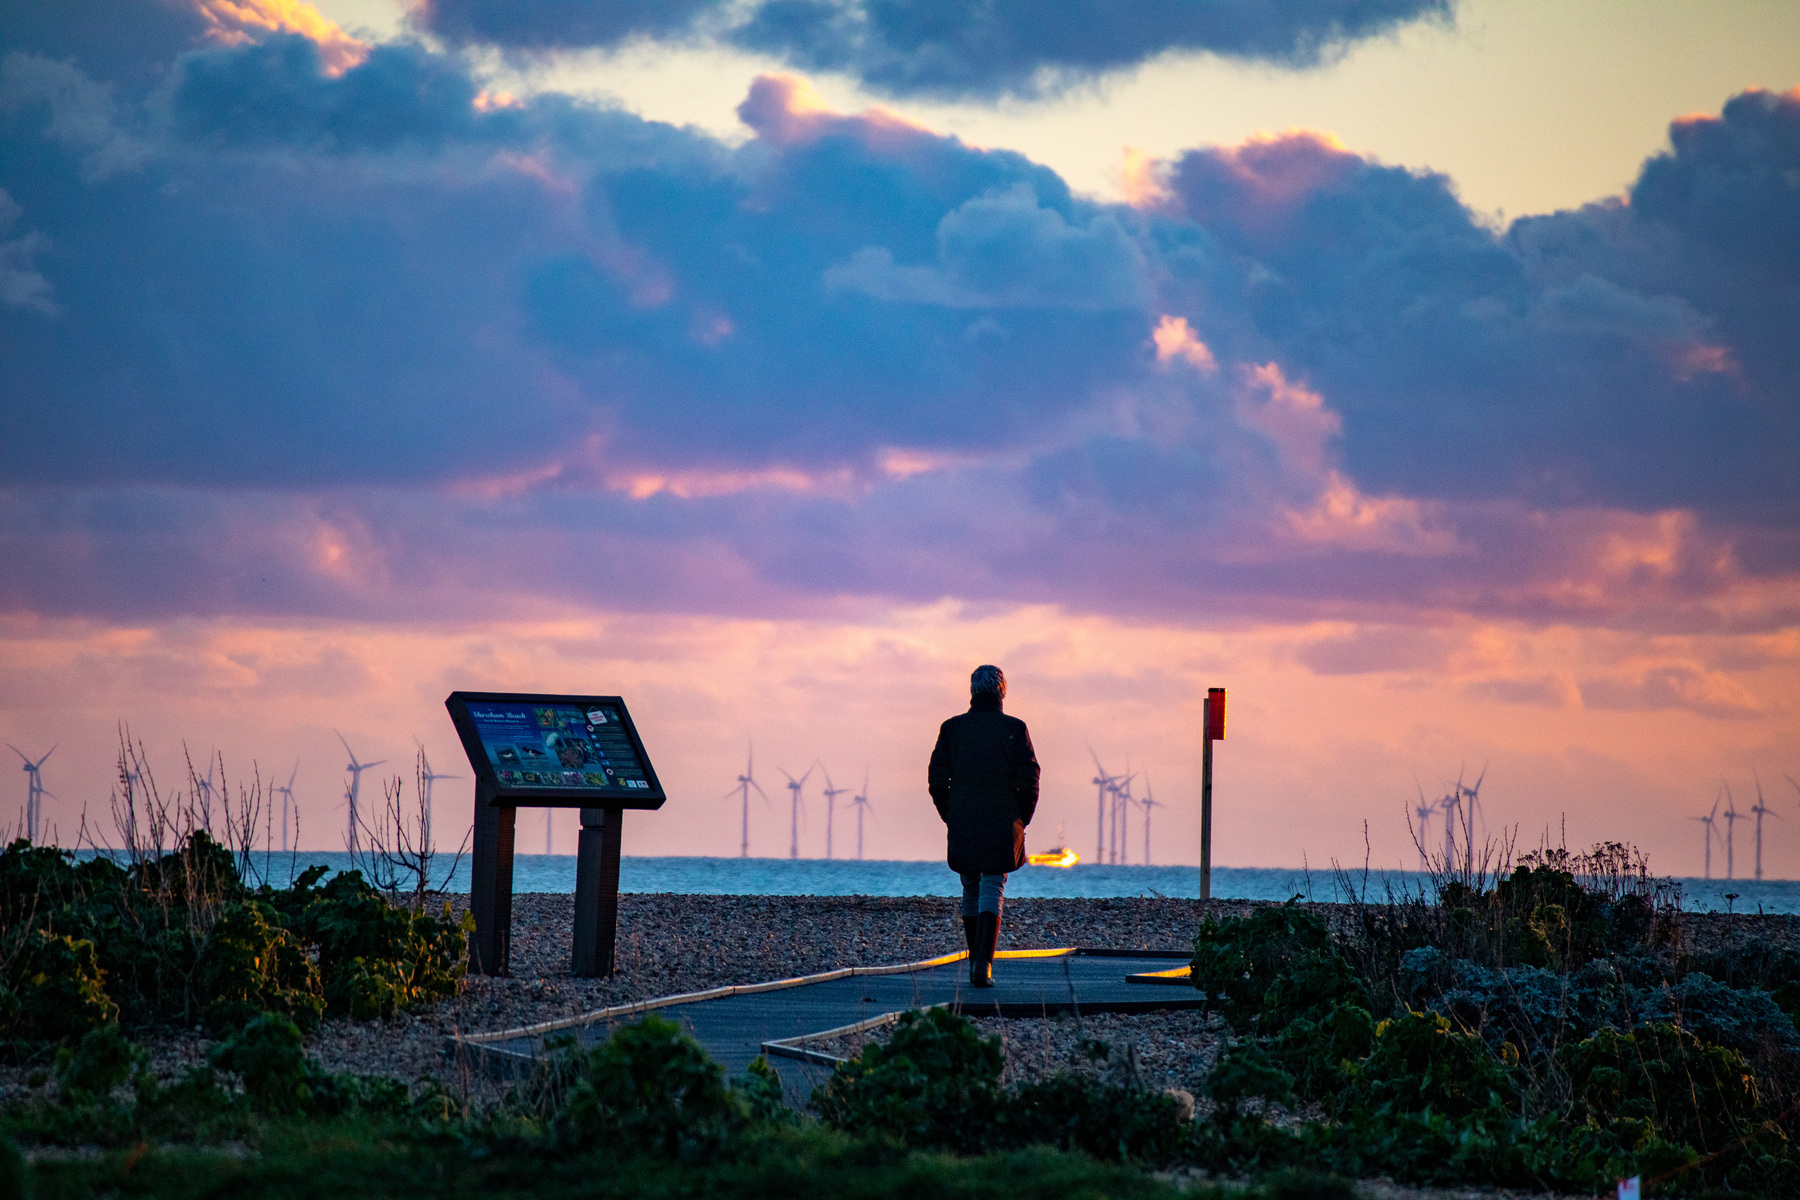 Evening light on Shoreham Beach, looking towards Rampion Wind Farm